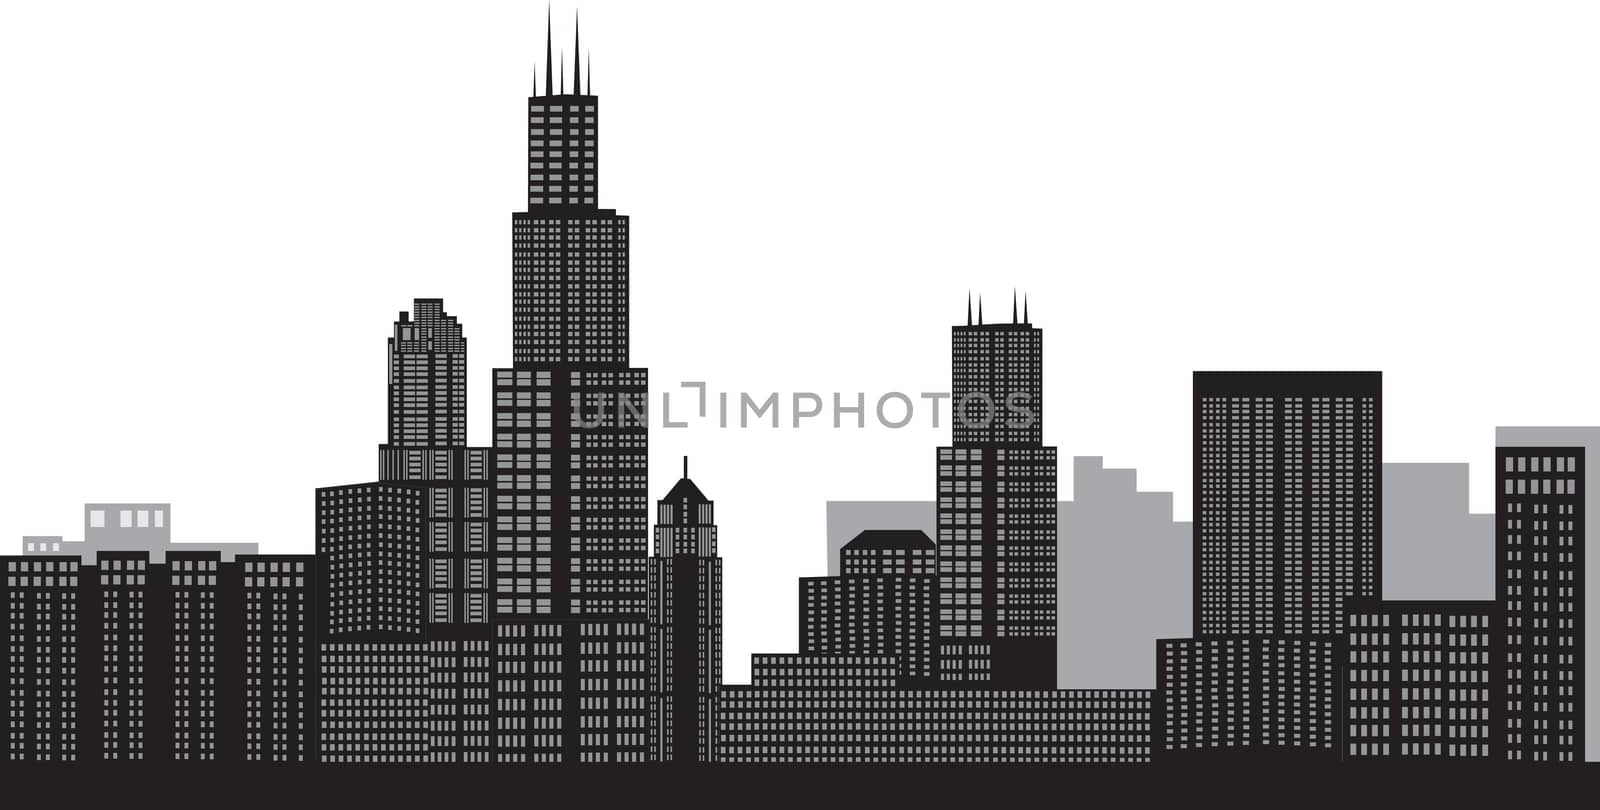 Chicago skyline by compuinfoto